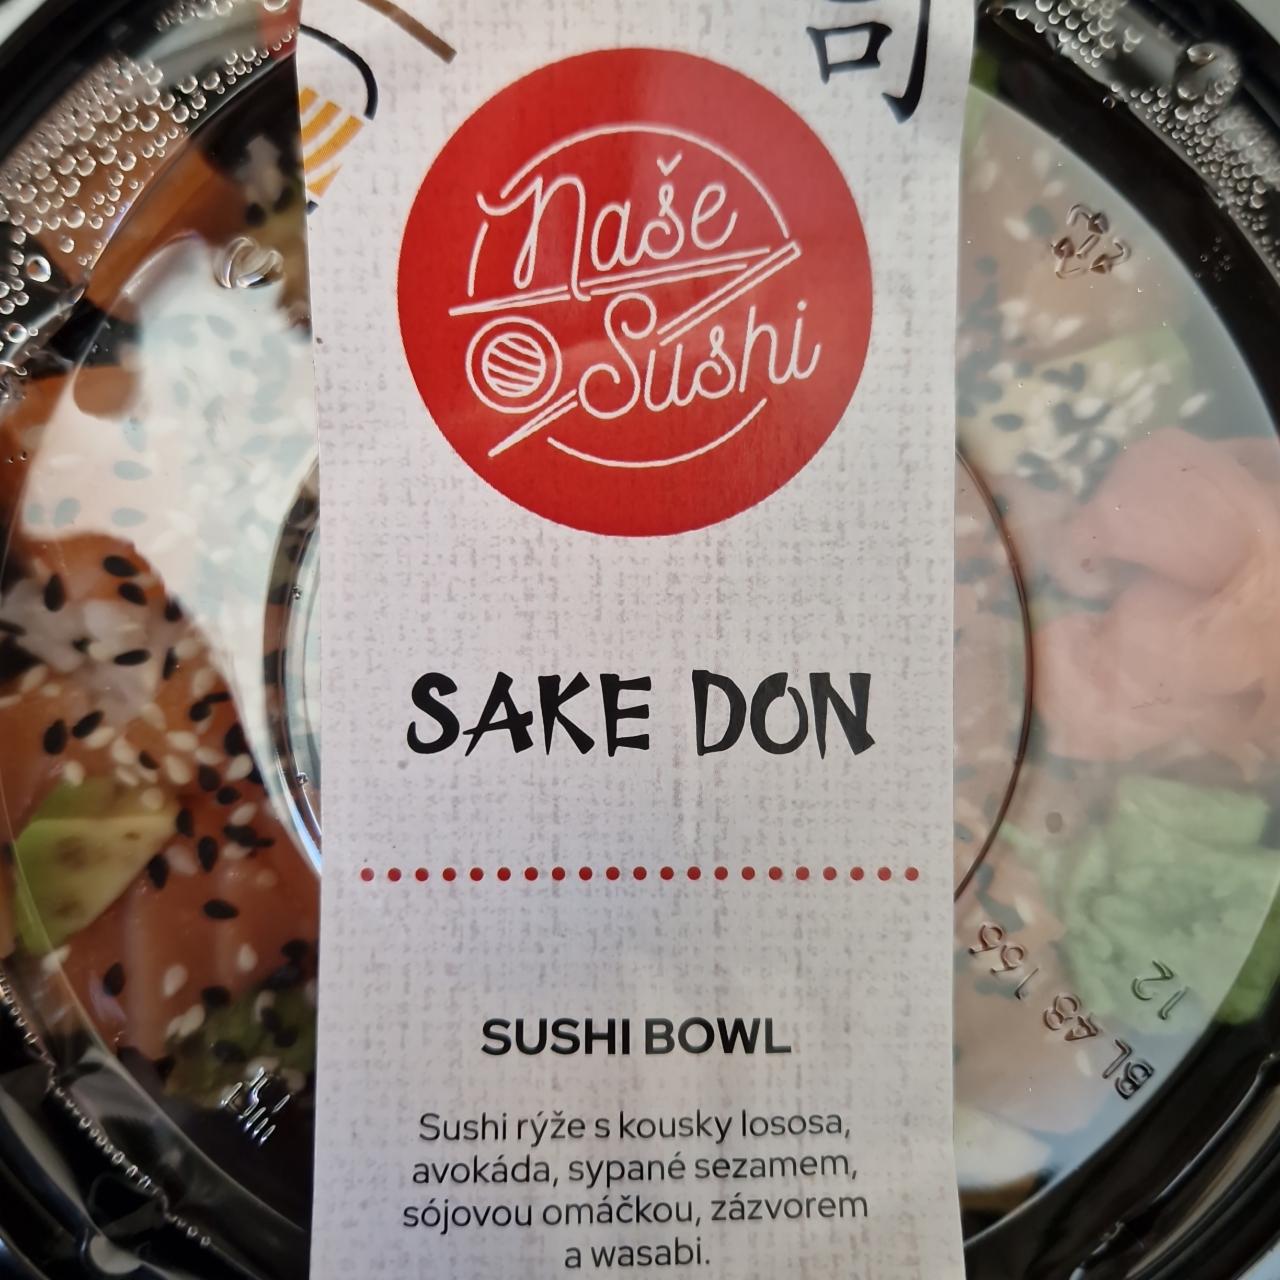 Fotografie - Sake Don sushi bowl Naše Sushi